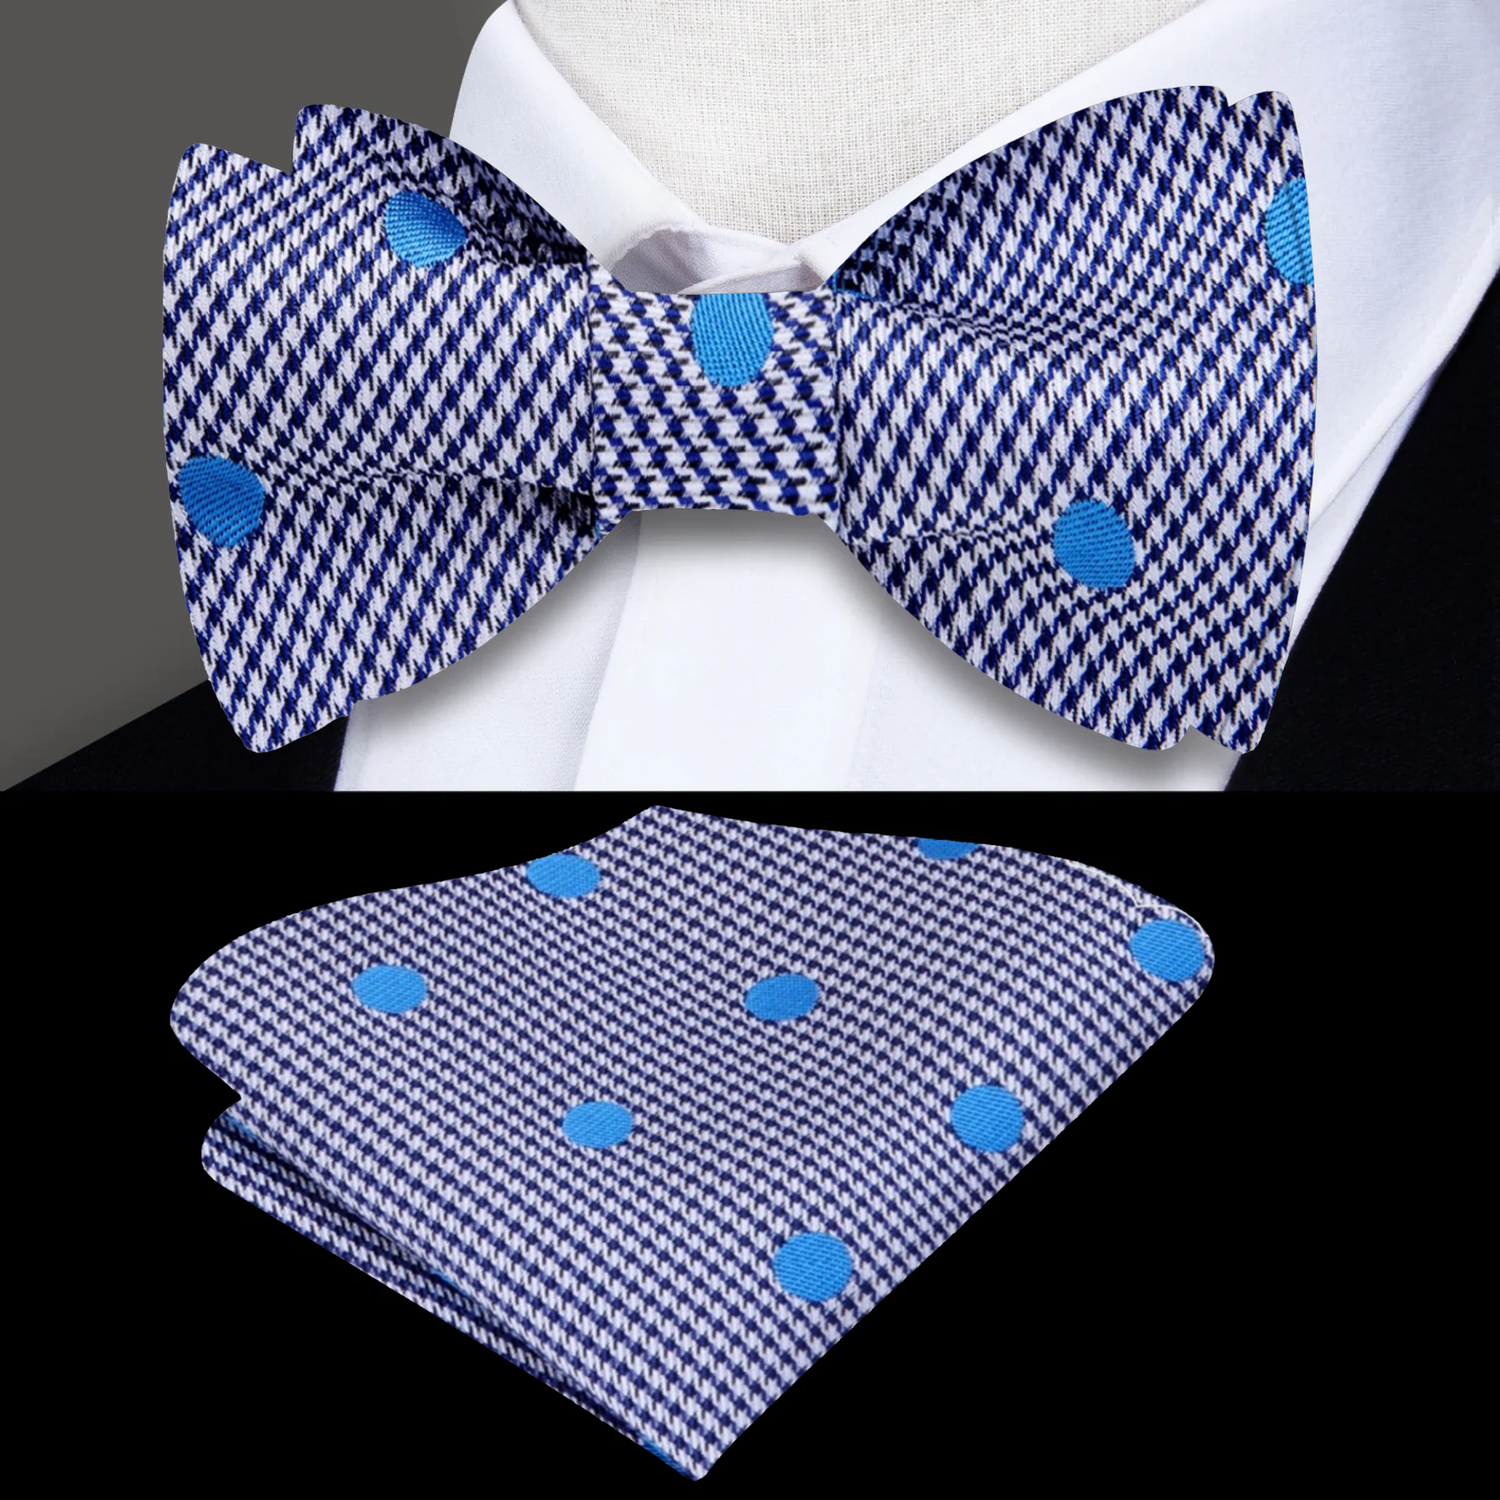 A Black, White, Blue Polka Dot Pattern Self Tie Bow Tie, Matching Pocket Square